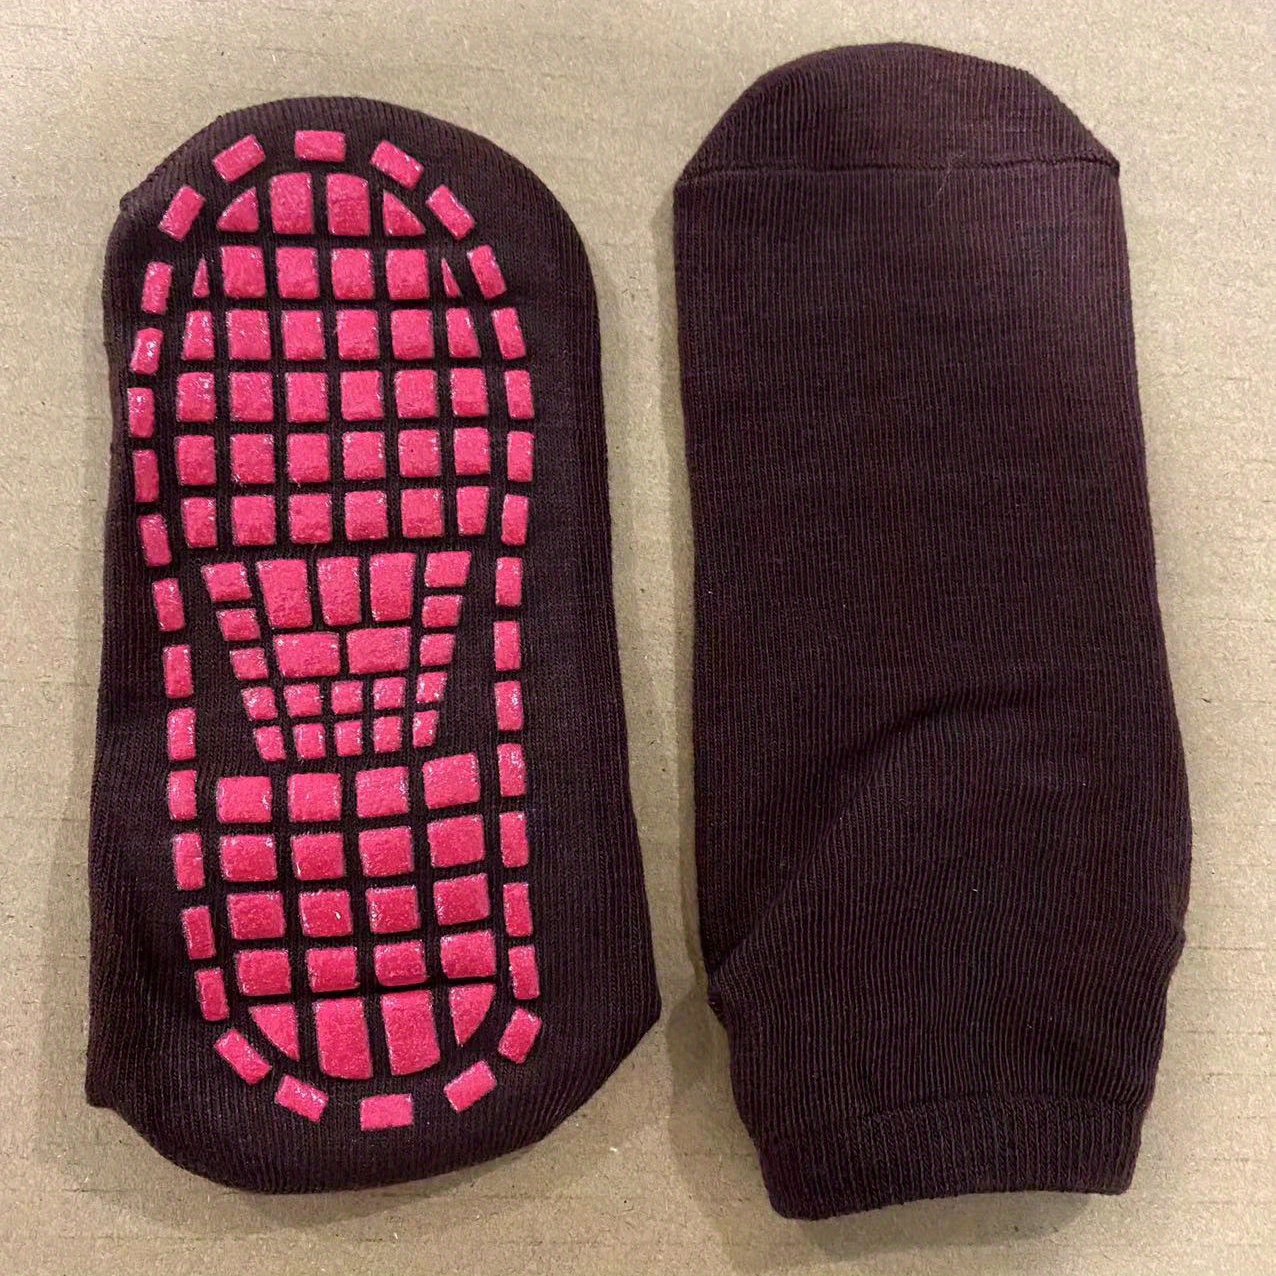 Women High Quality Pilates Socks Anti-Slip Breathable Backless Yoga Socks -  China Yoga Socks and Adult Non Slip Yoga Socks price